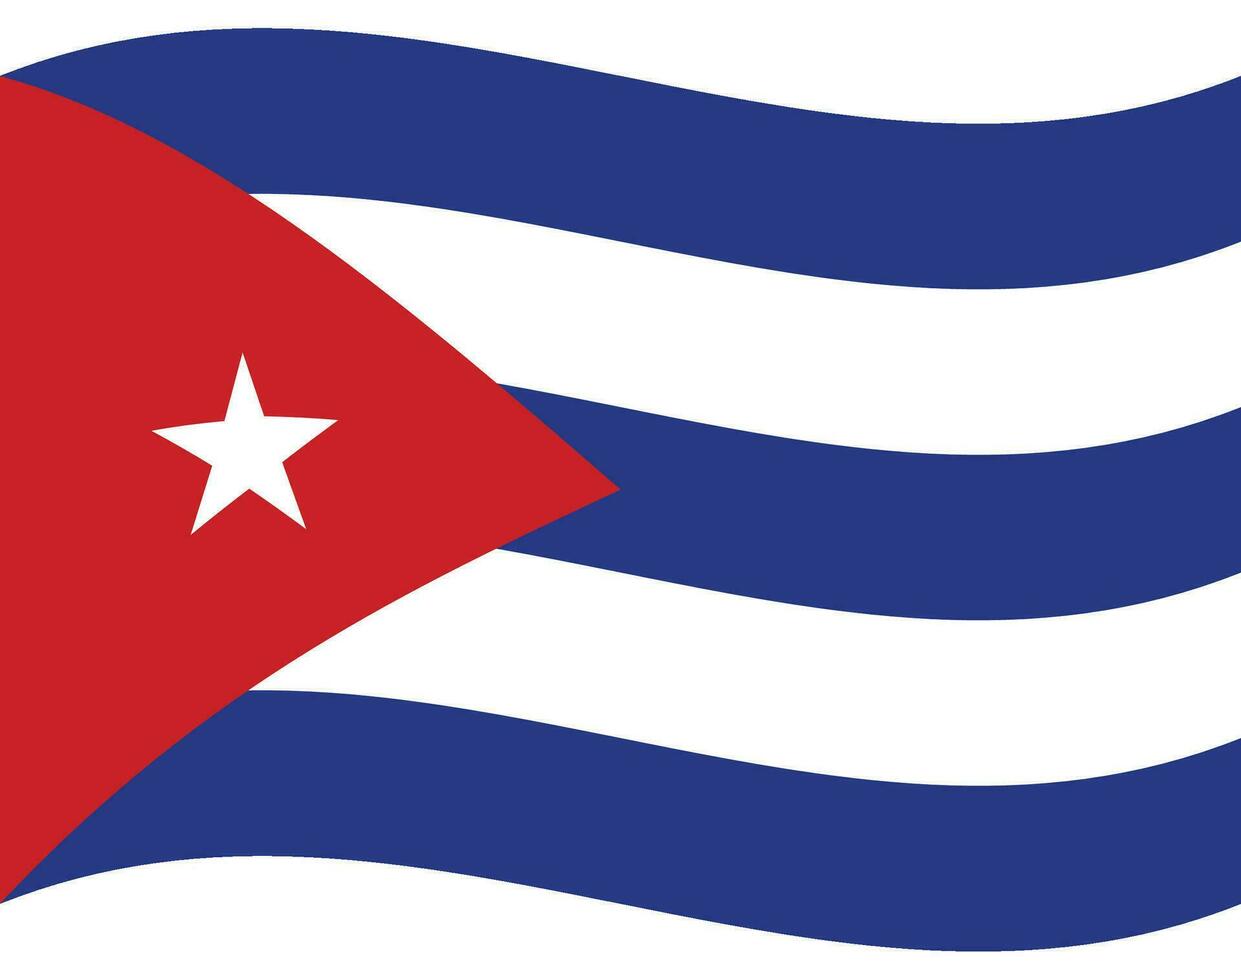 Cuba flag. Flag of Cuba. Cuba flag wave vector